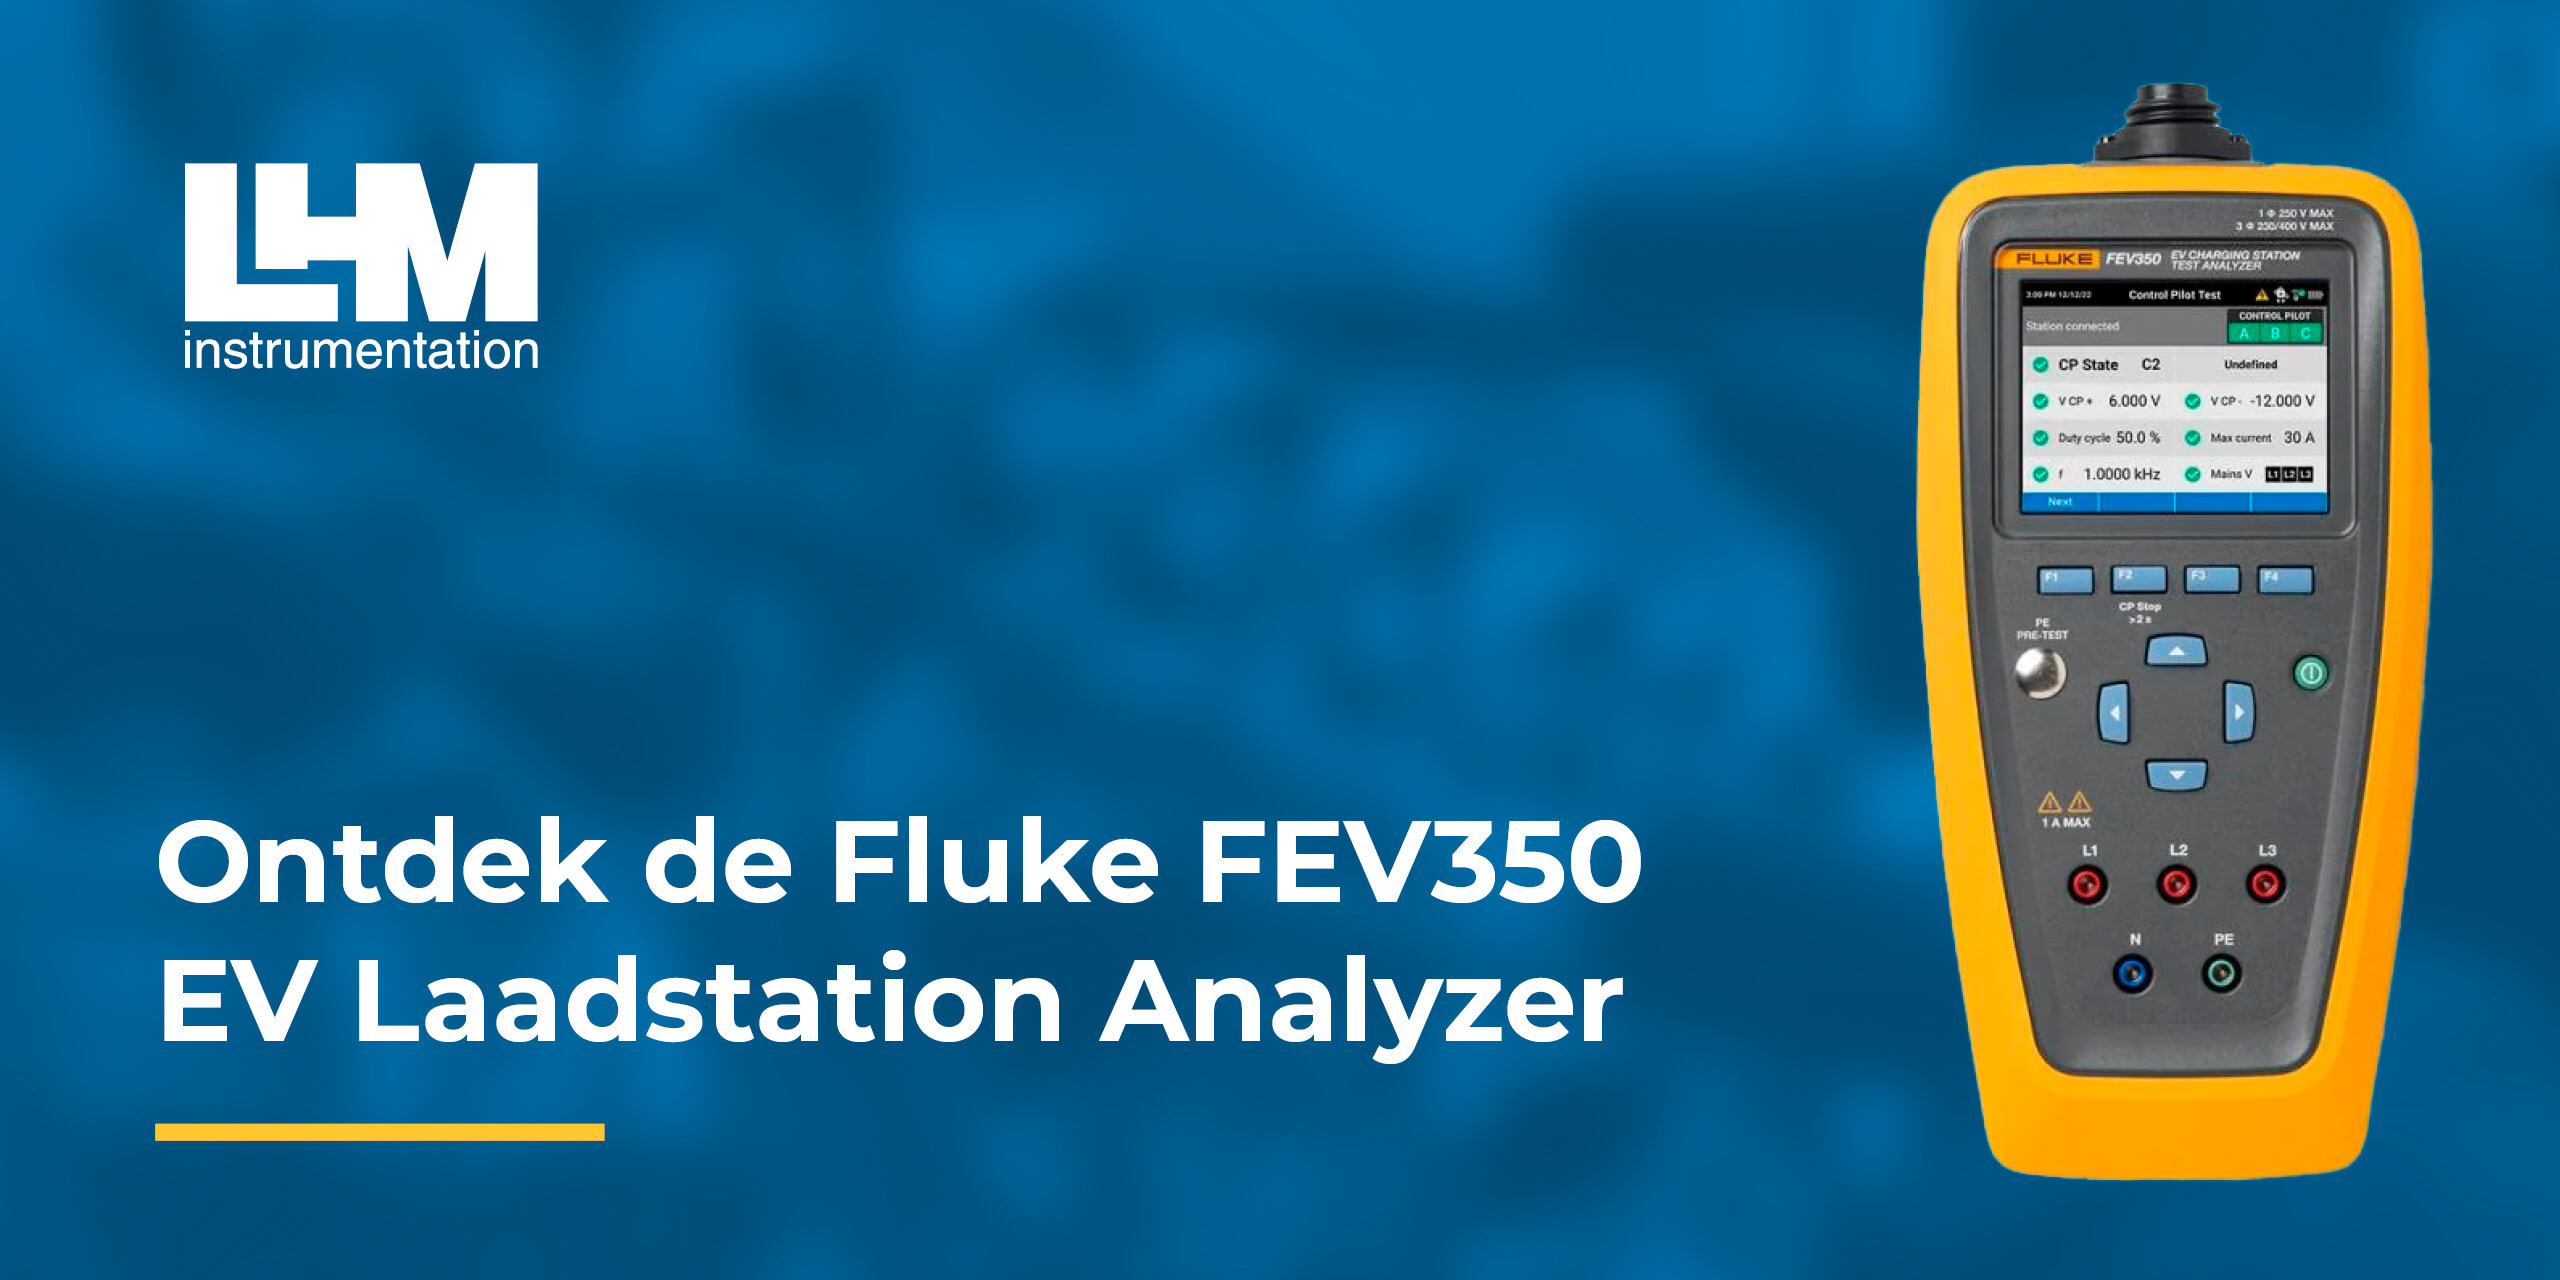 Ontdek de Fluke FEV350 EV Laadstation Analyzer bij LHM Instrumentation